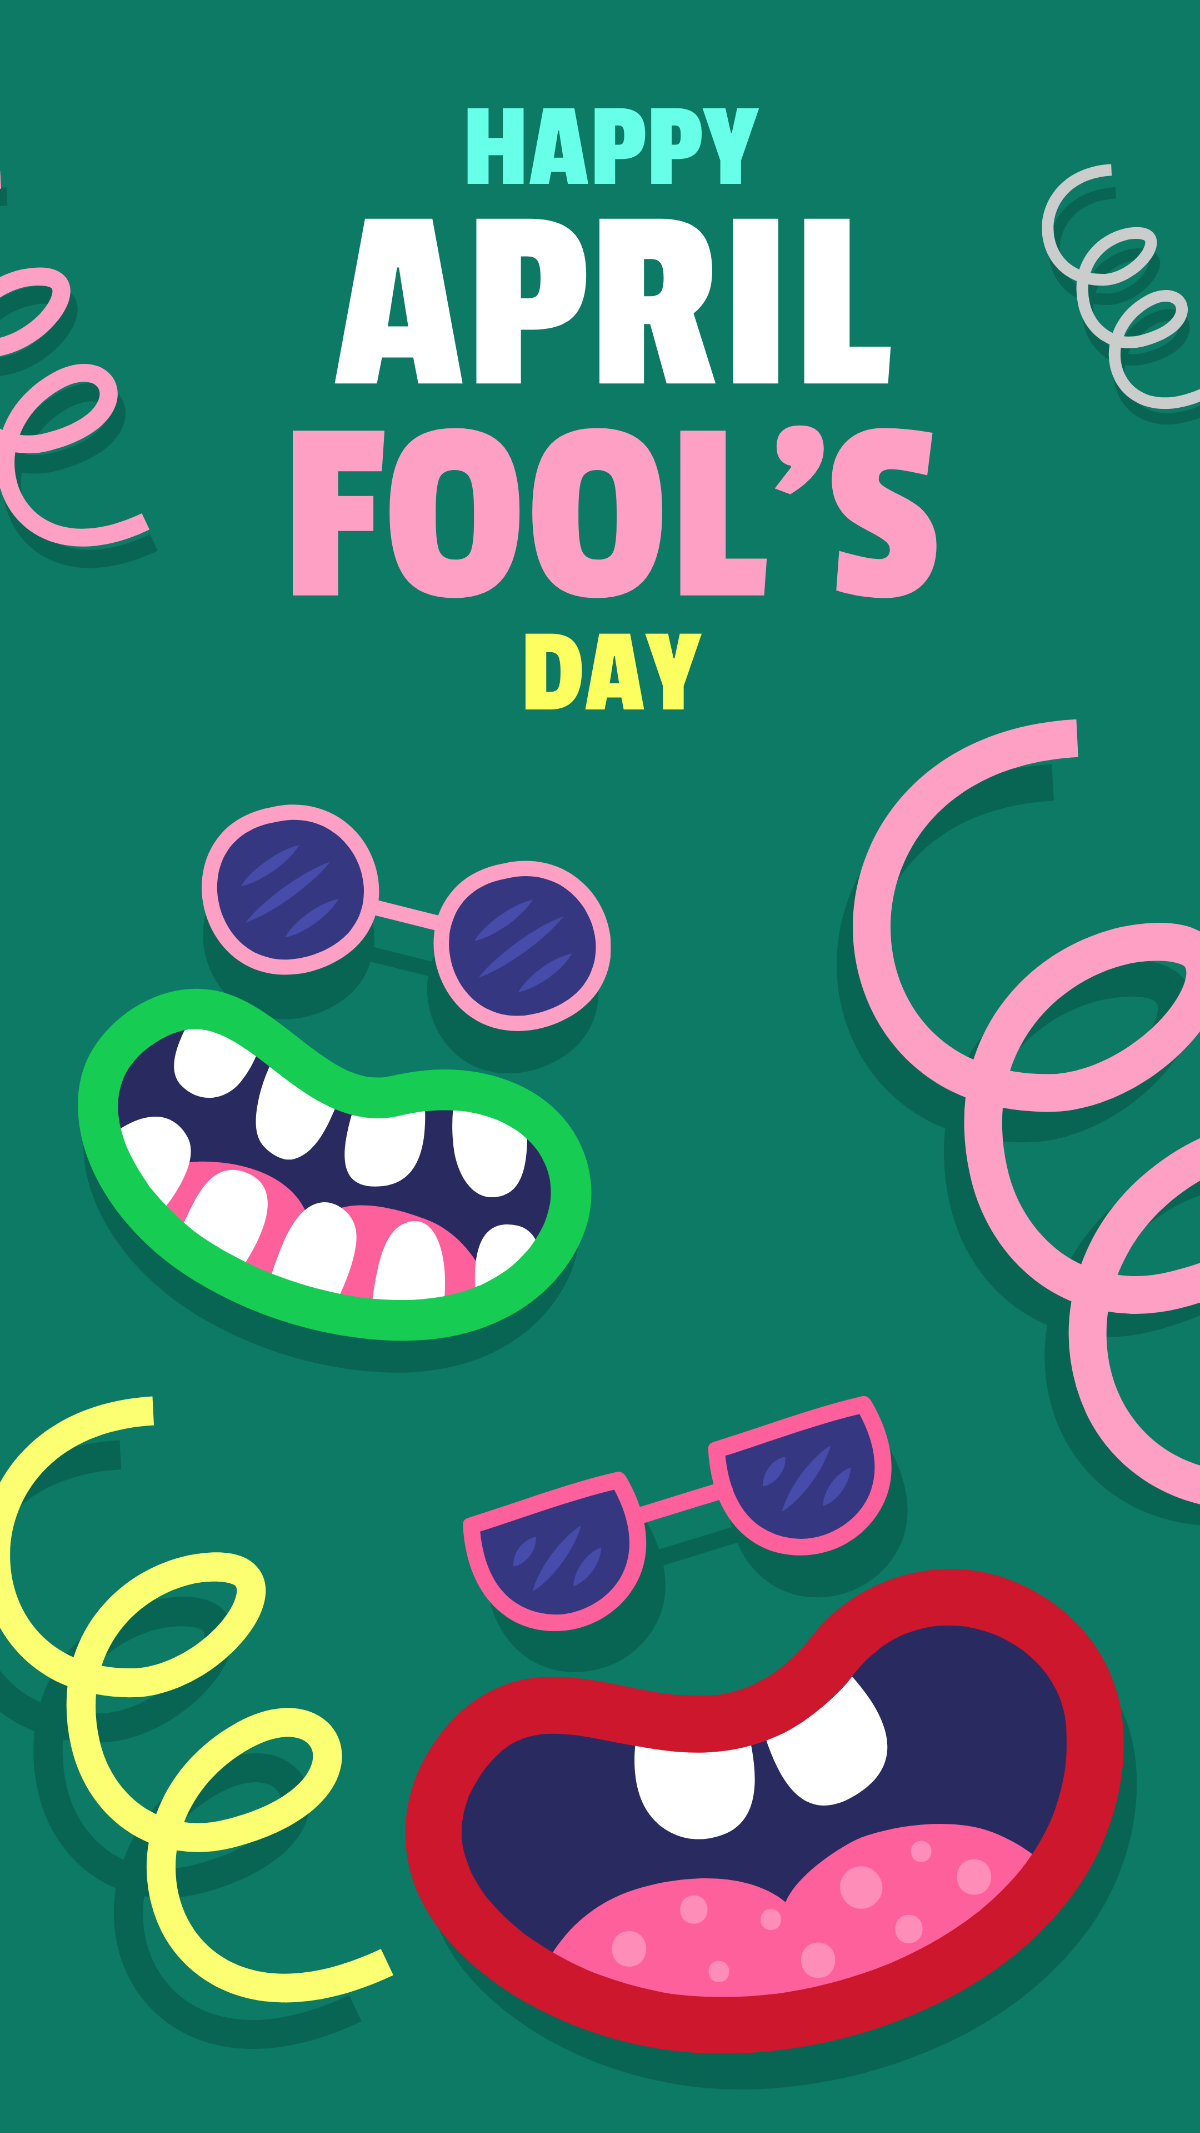 Free April Fools’ Day Wallpaper Template